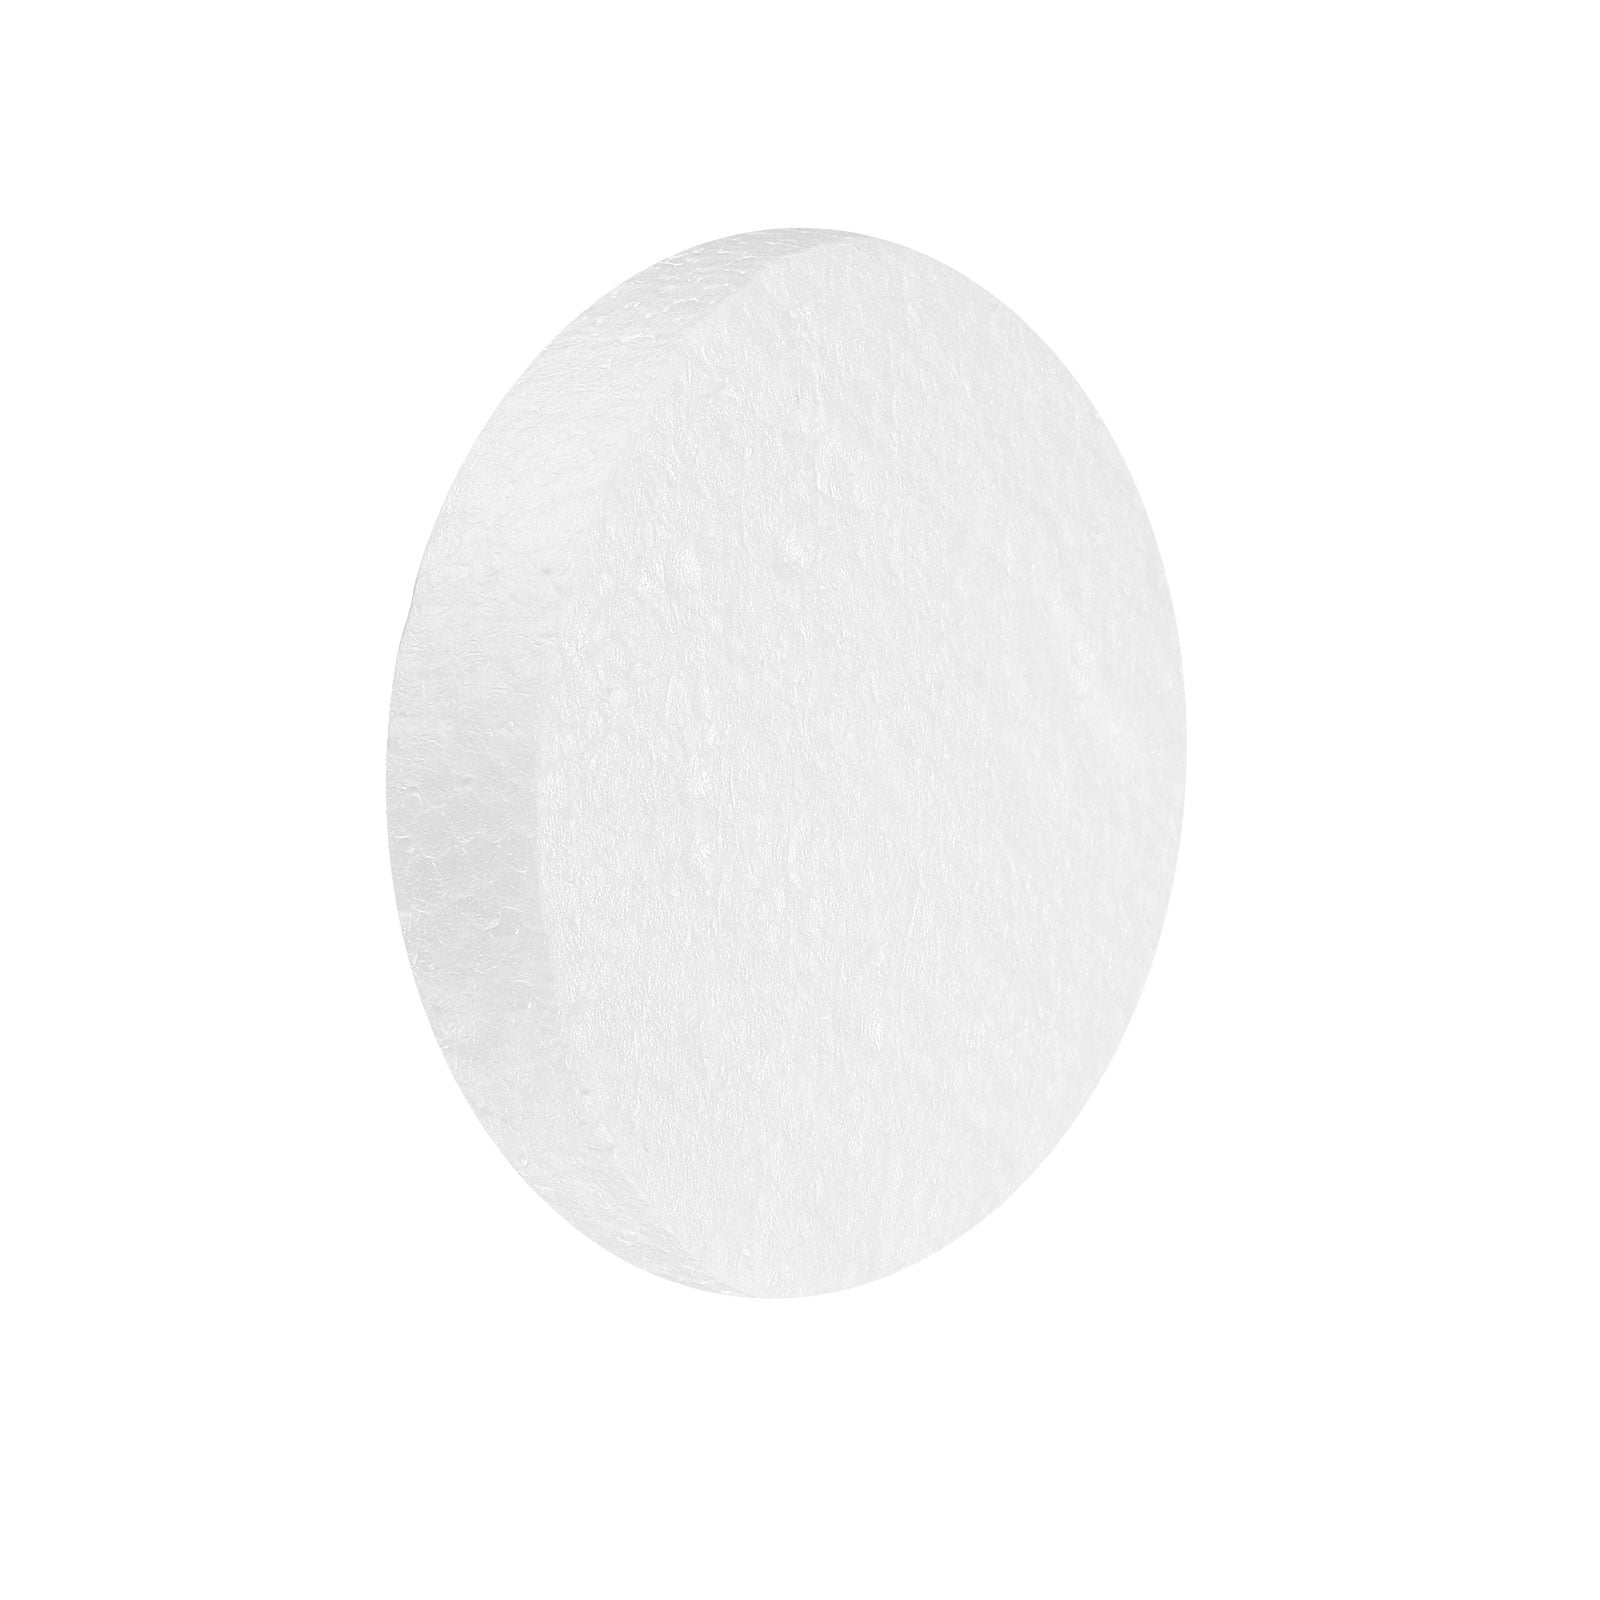 Foam Circles for Crafts 3.94 x 0.79 Inch Polystyrene Round Foam Disc -  White - Bed Bath & Beyond - 37253611